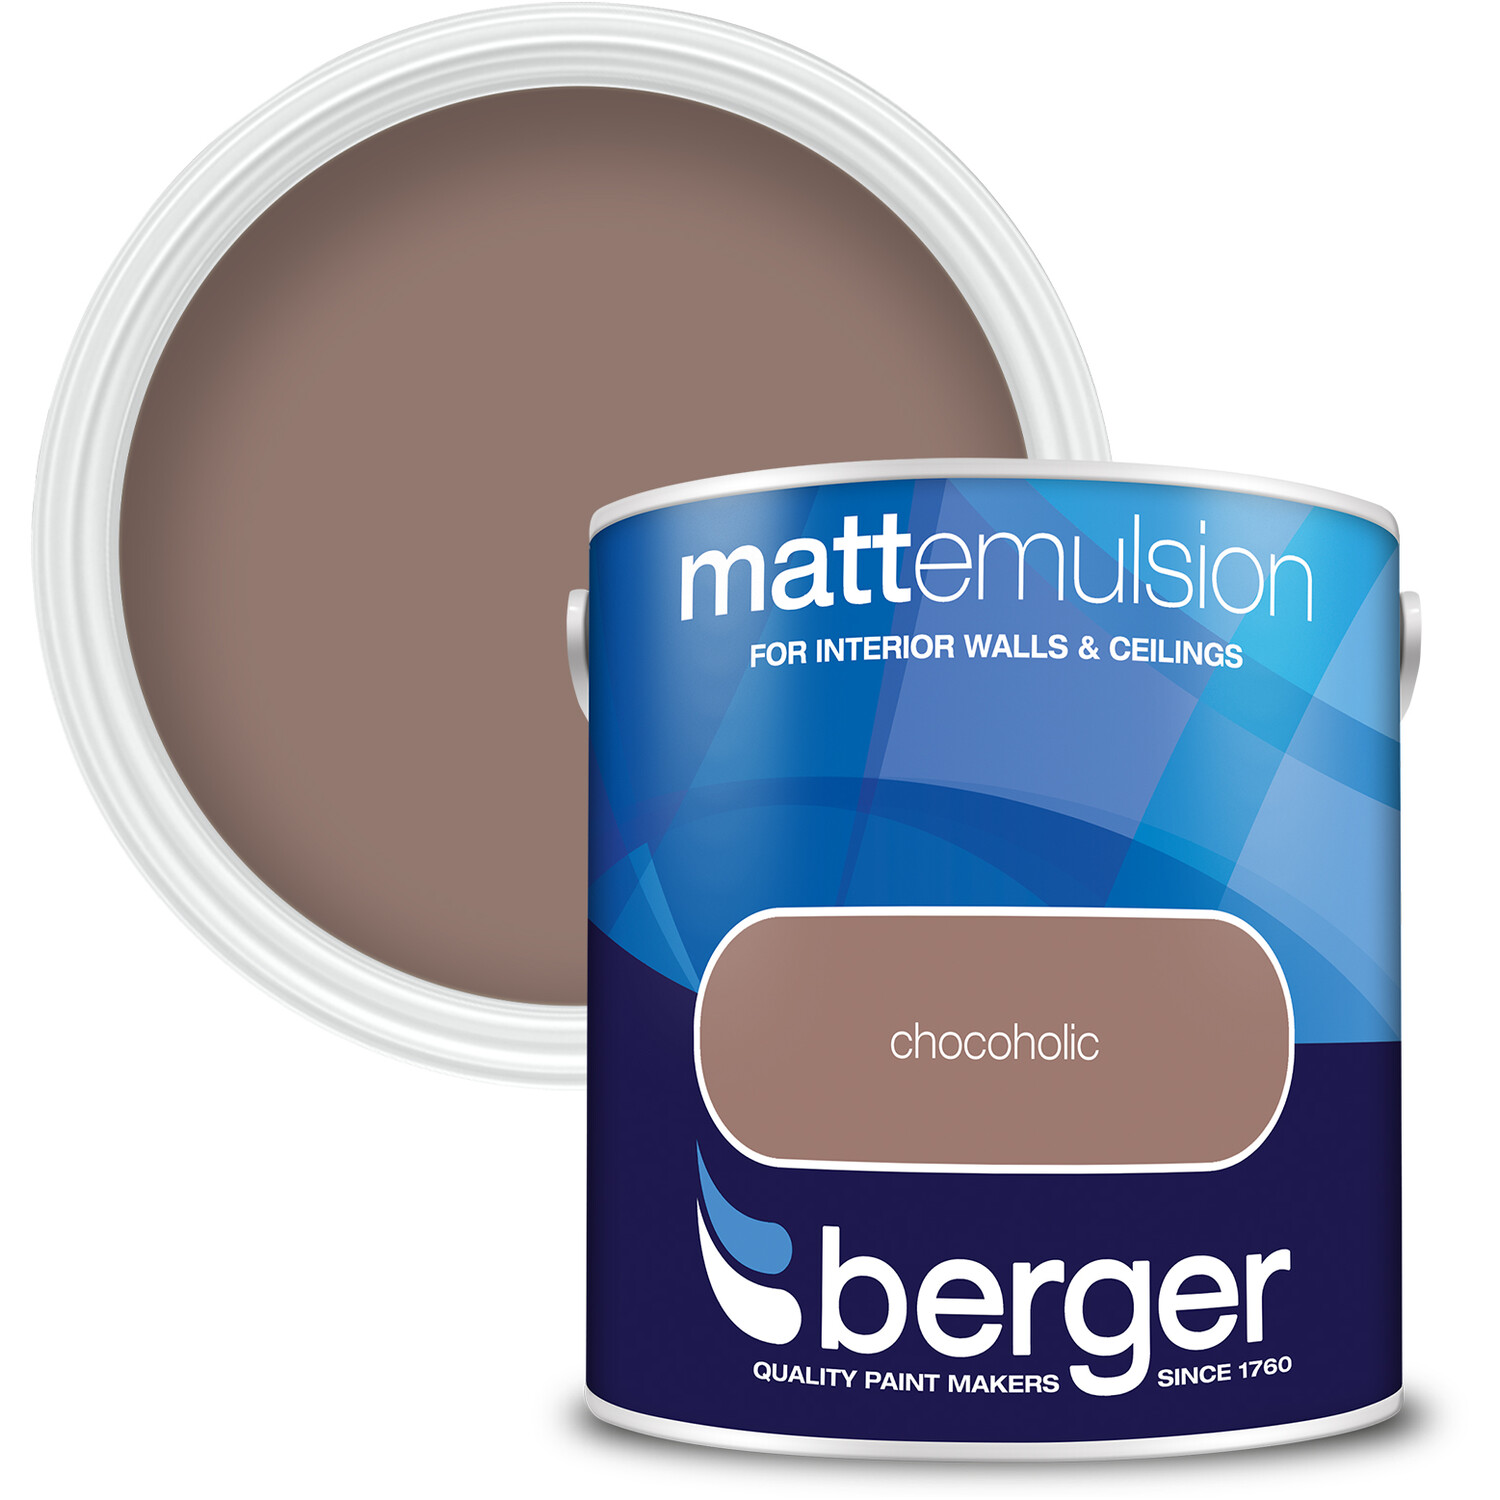 Berger Walls & Ceilings Chocoholic Matt Emulsion Paint 2.5L Image 1